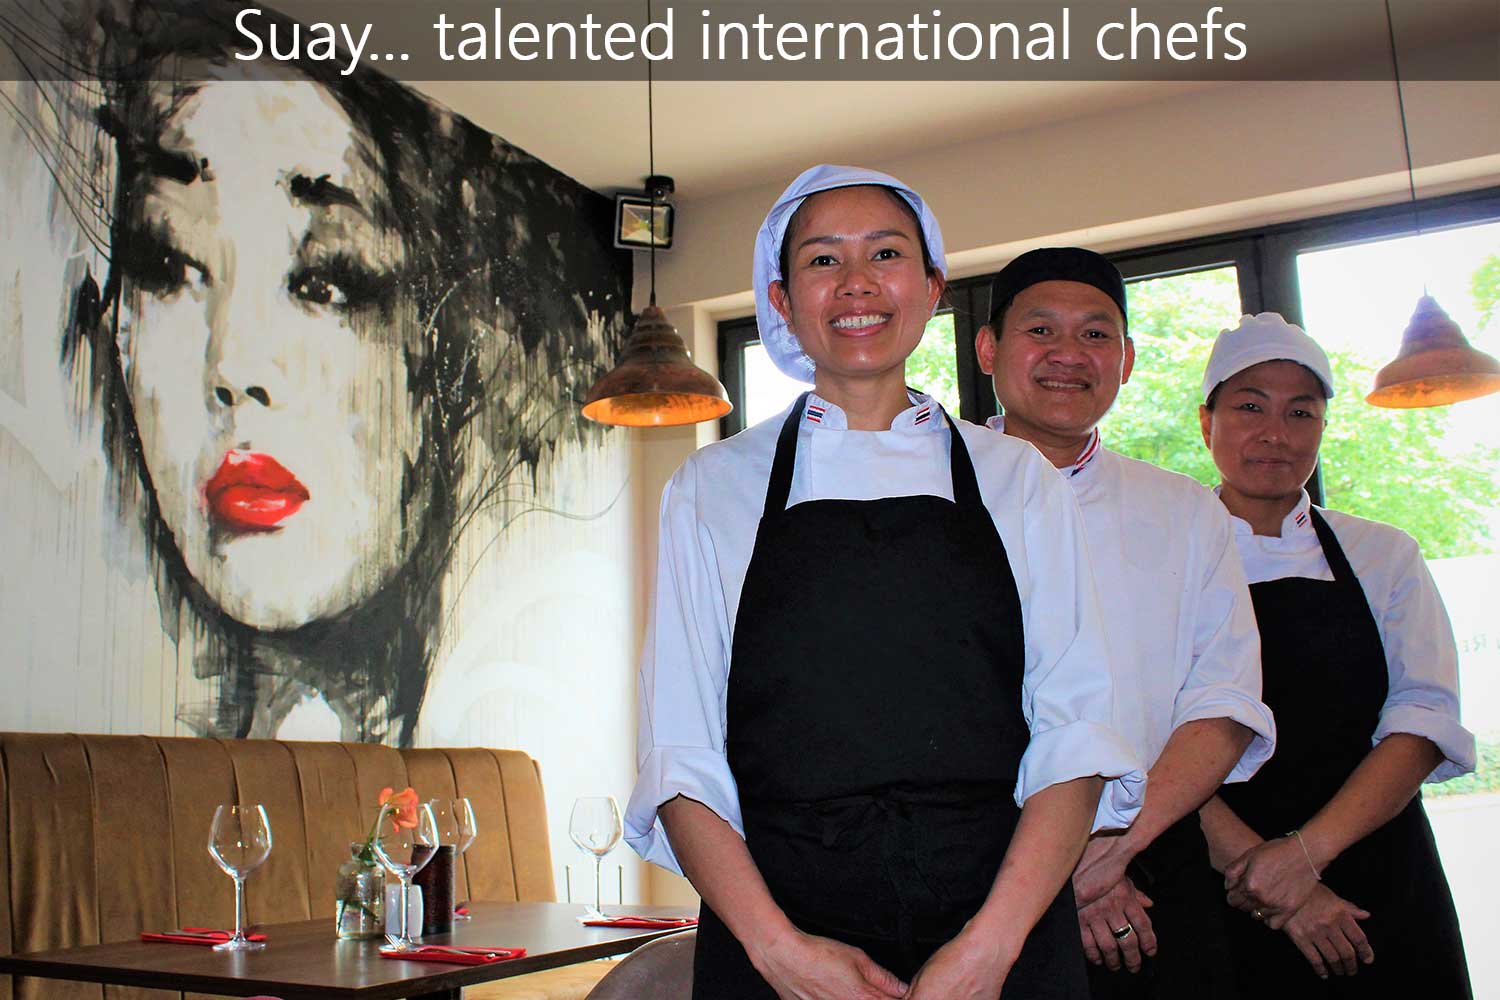 Suay Pan Asian Restaurant, Formby, Merseyside, talented international chefs